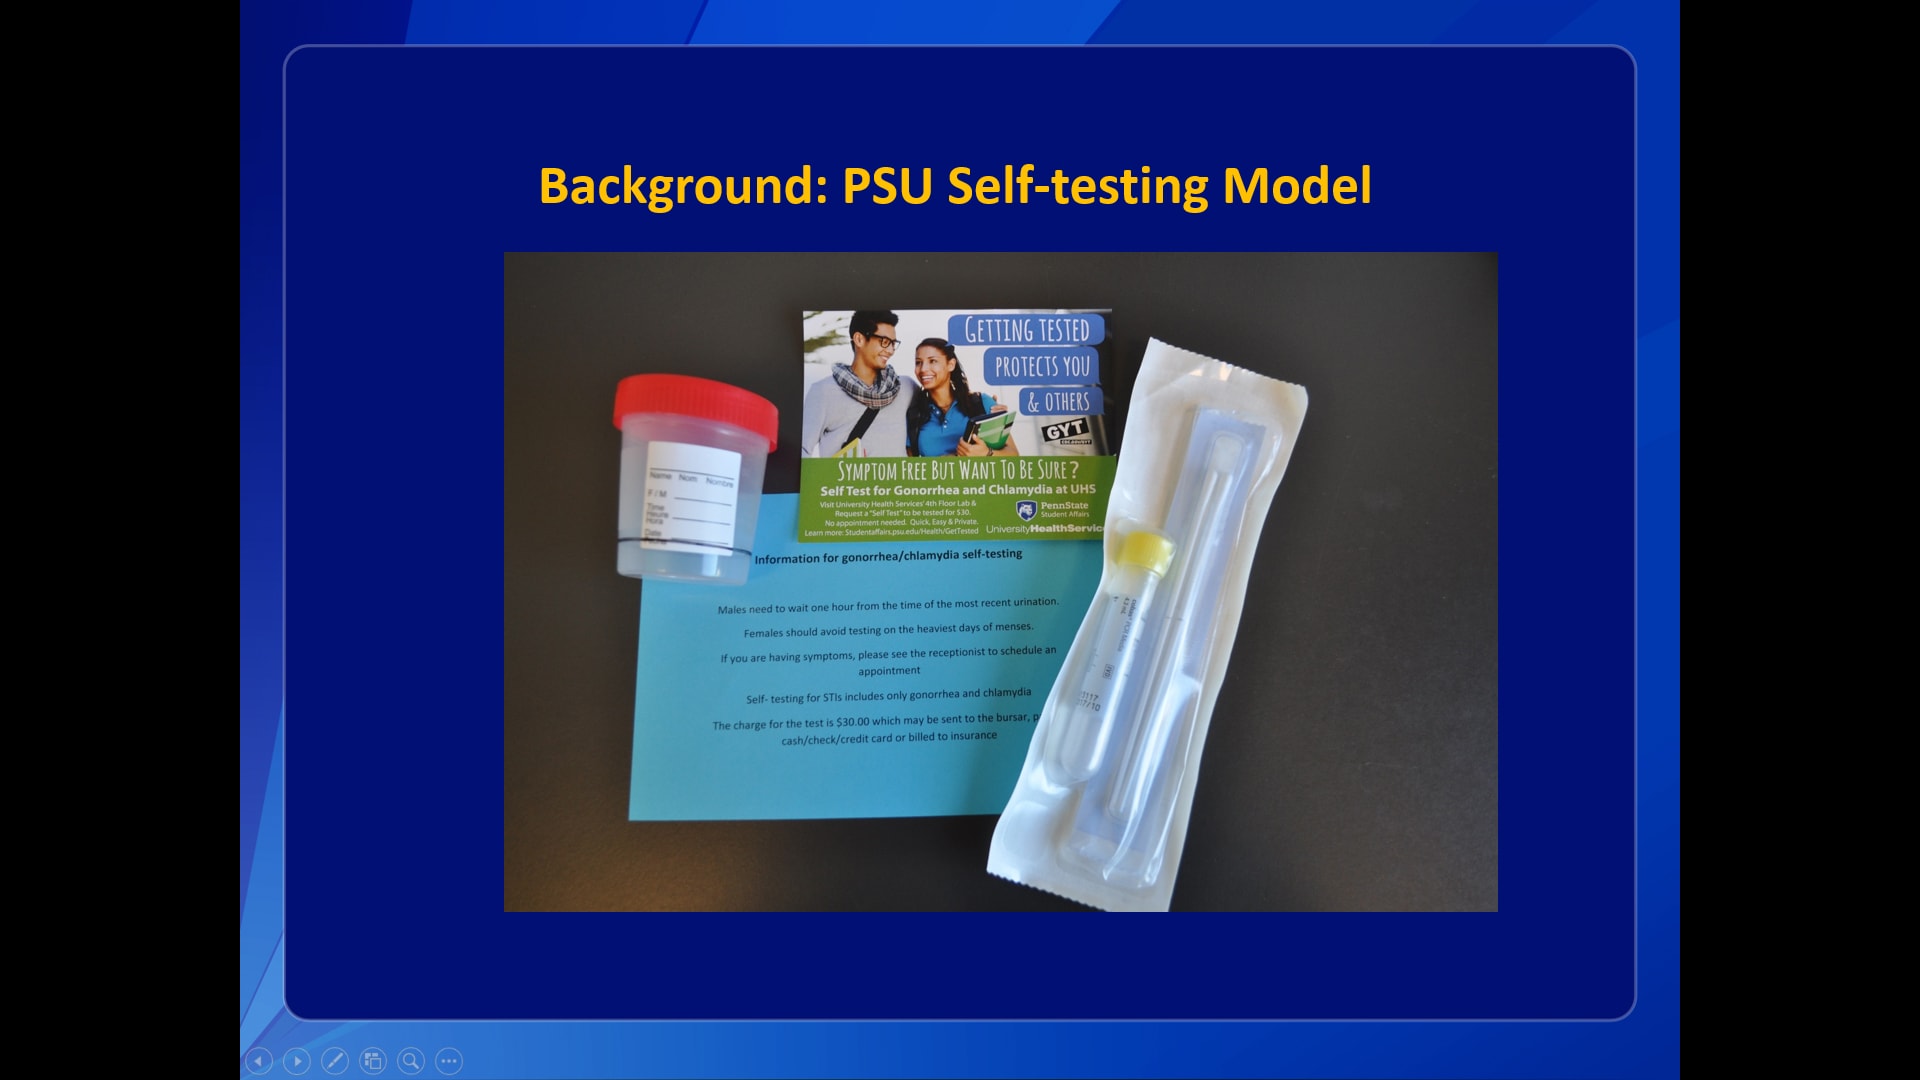 2C5: STD Self-Test Program